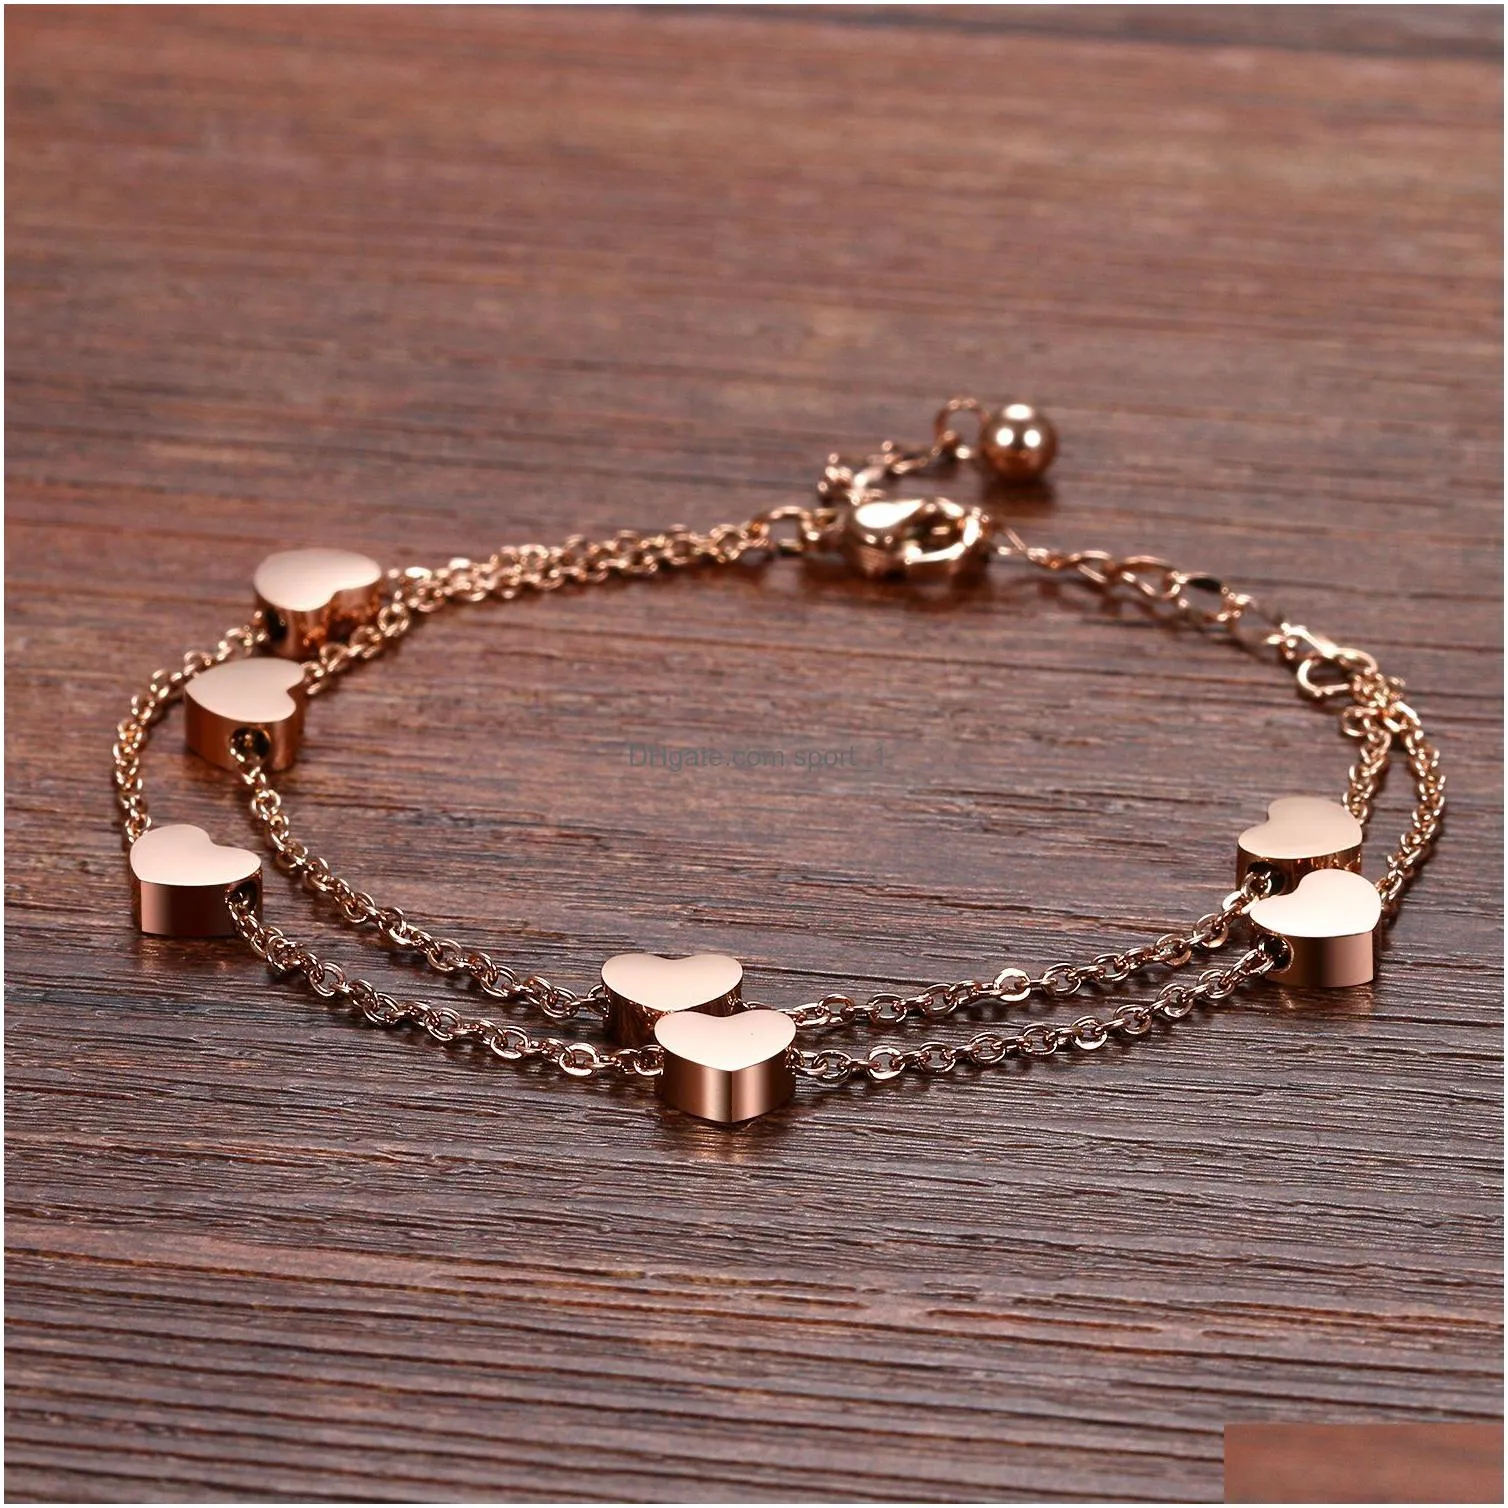  fashion women stainless steel heart love charm bracelet elegant gold silver plating adjustable wrist link chain bracelet trendy